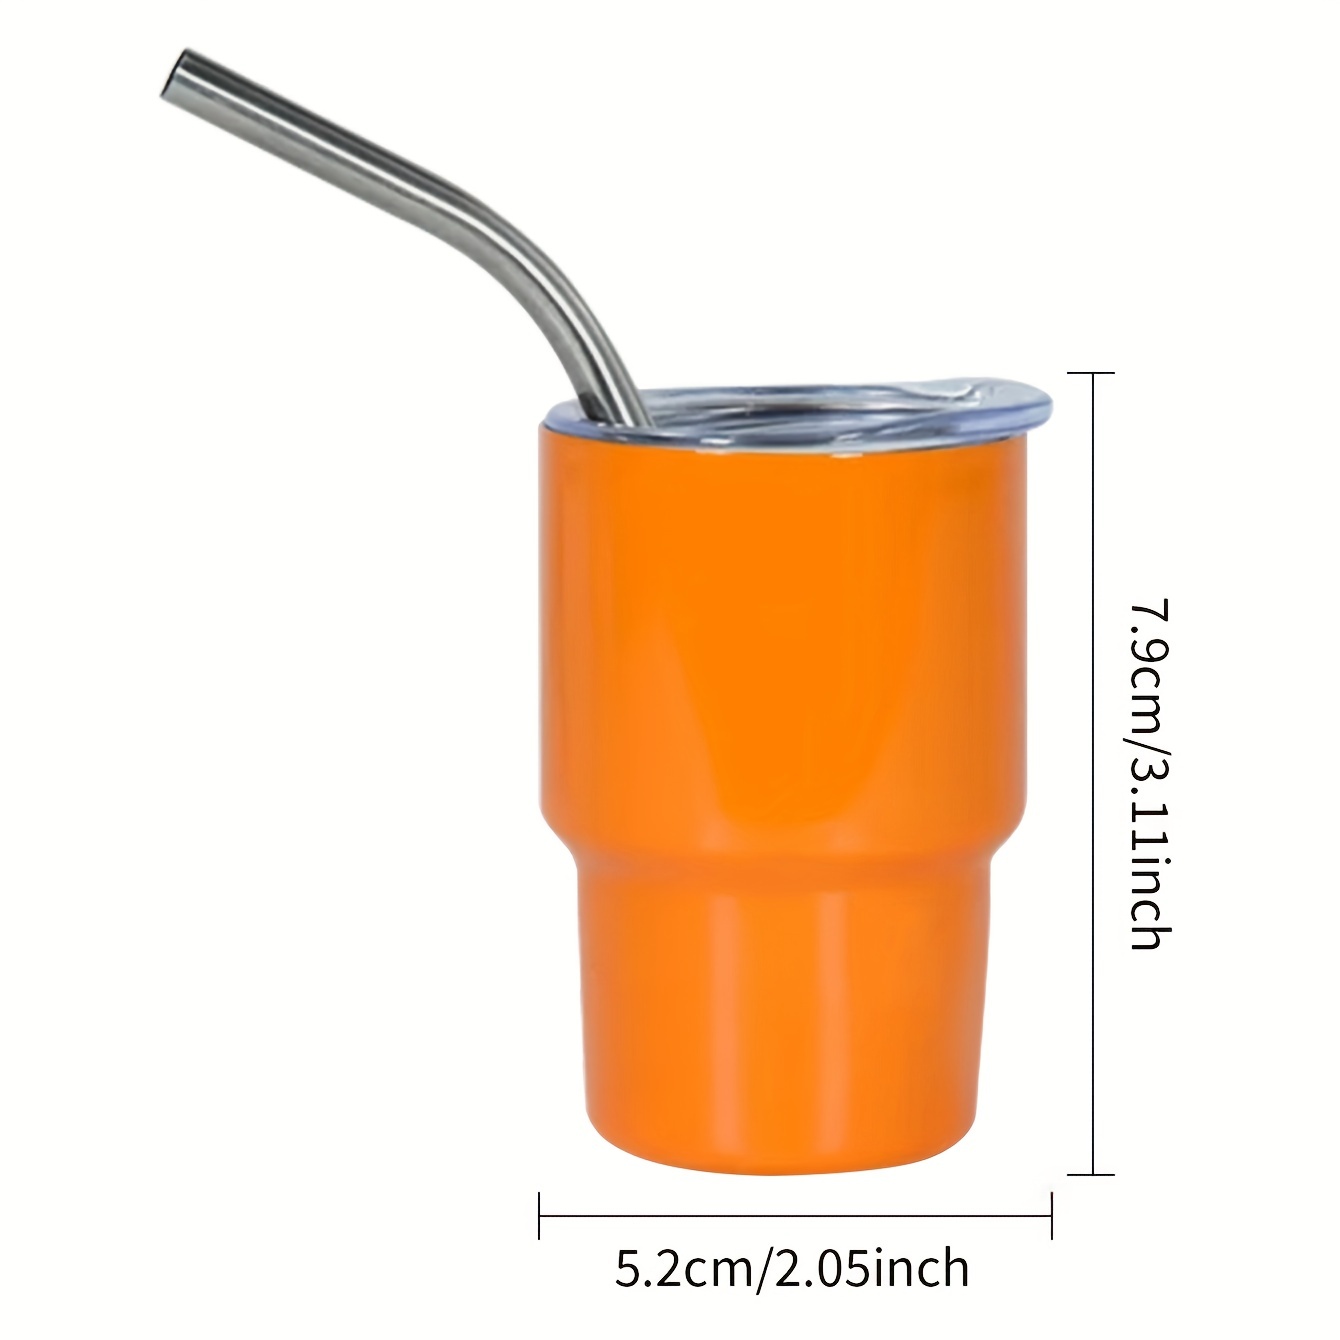 Custom Coffee Tumbler - 30 oz Orange Insulated Tumbler with Straw